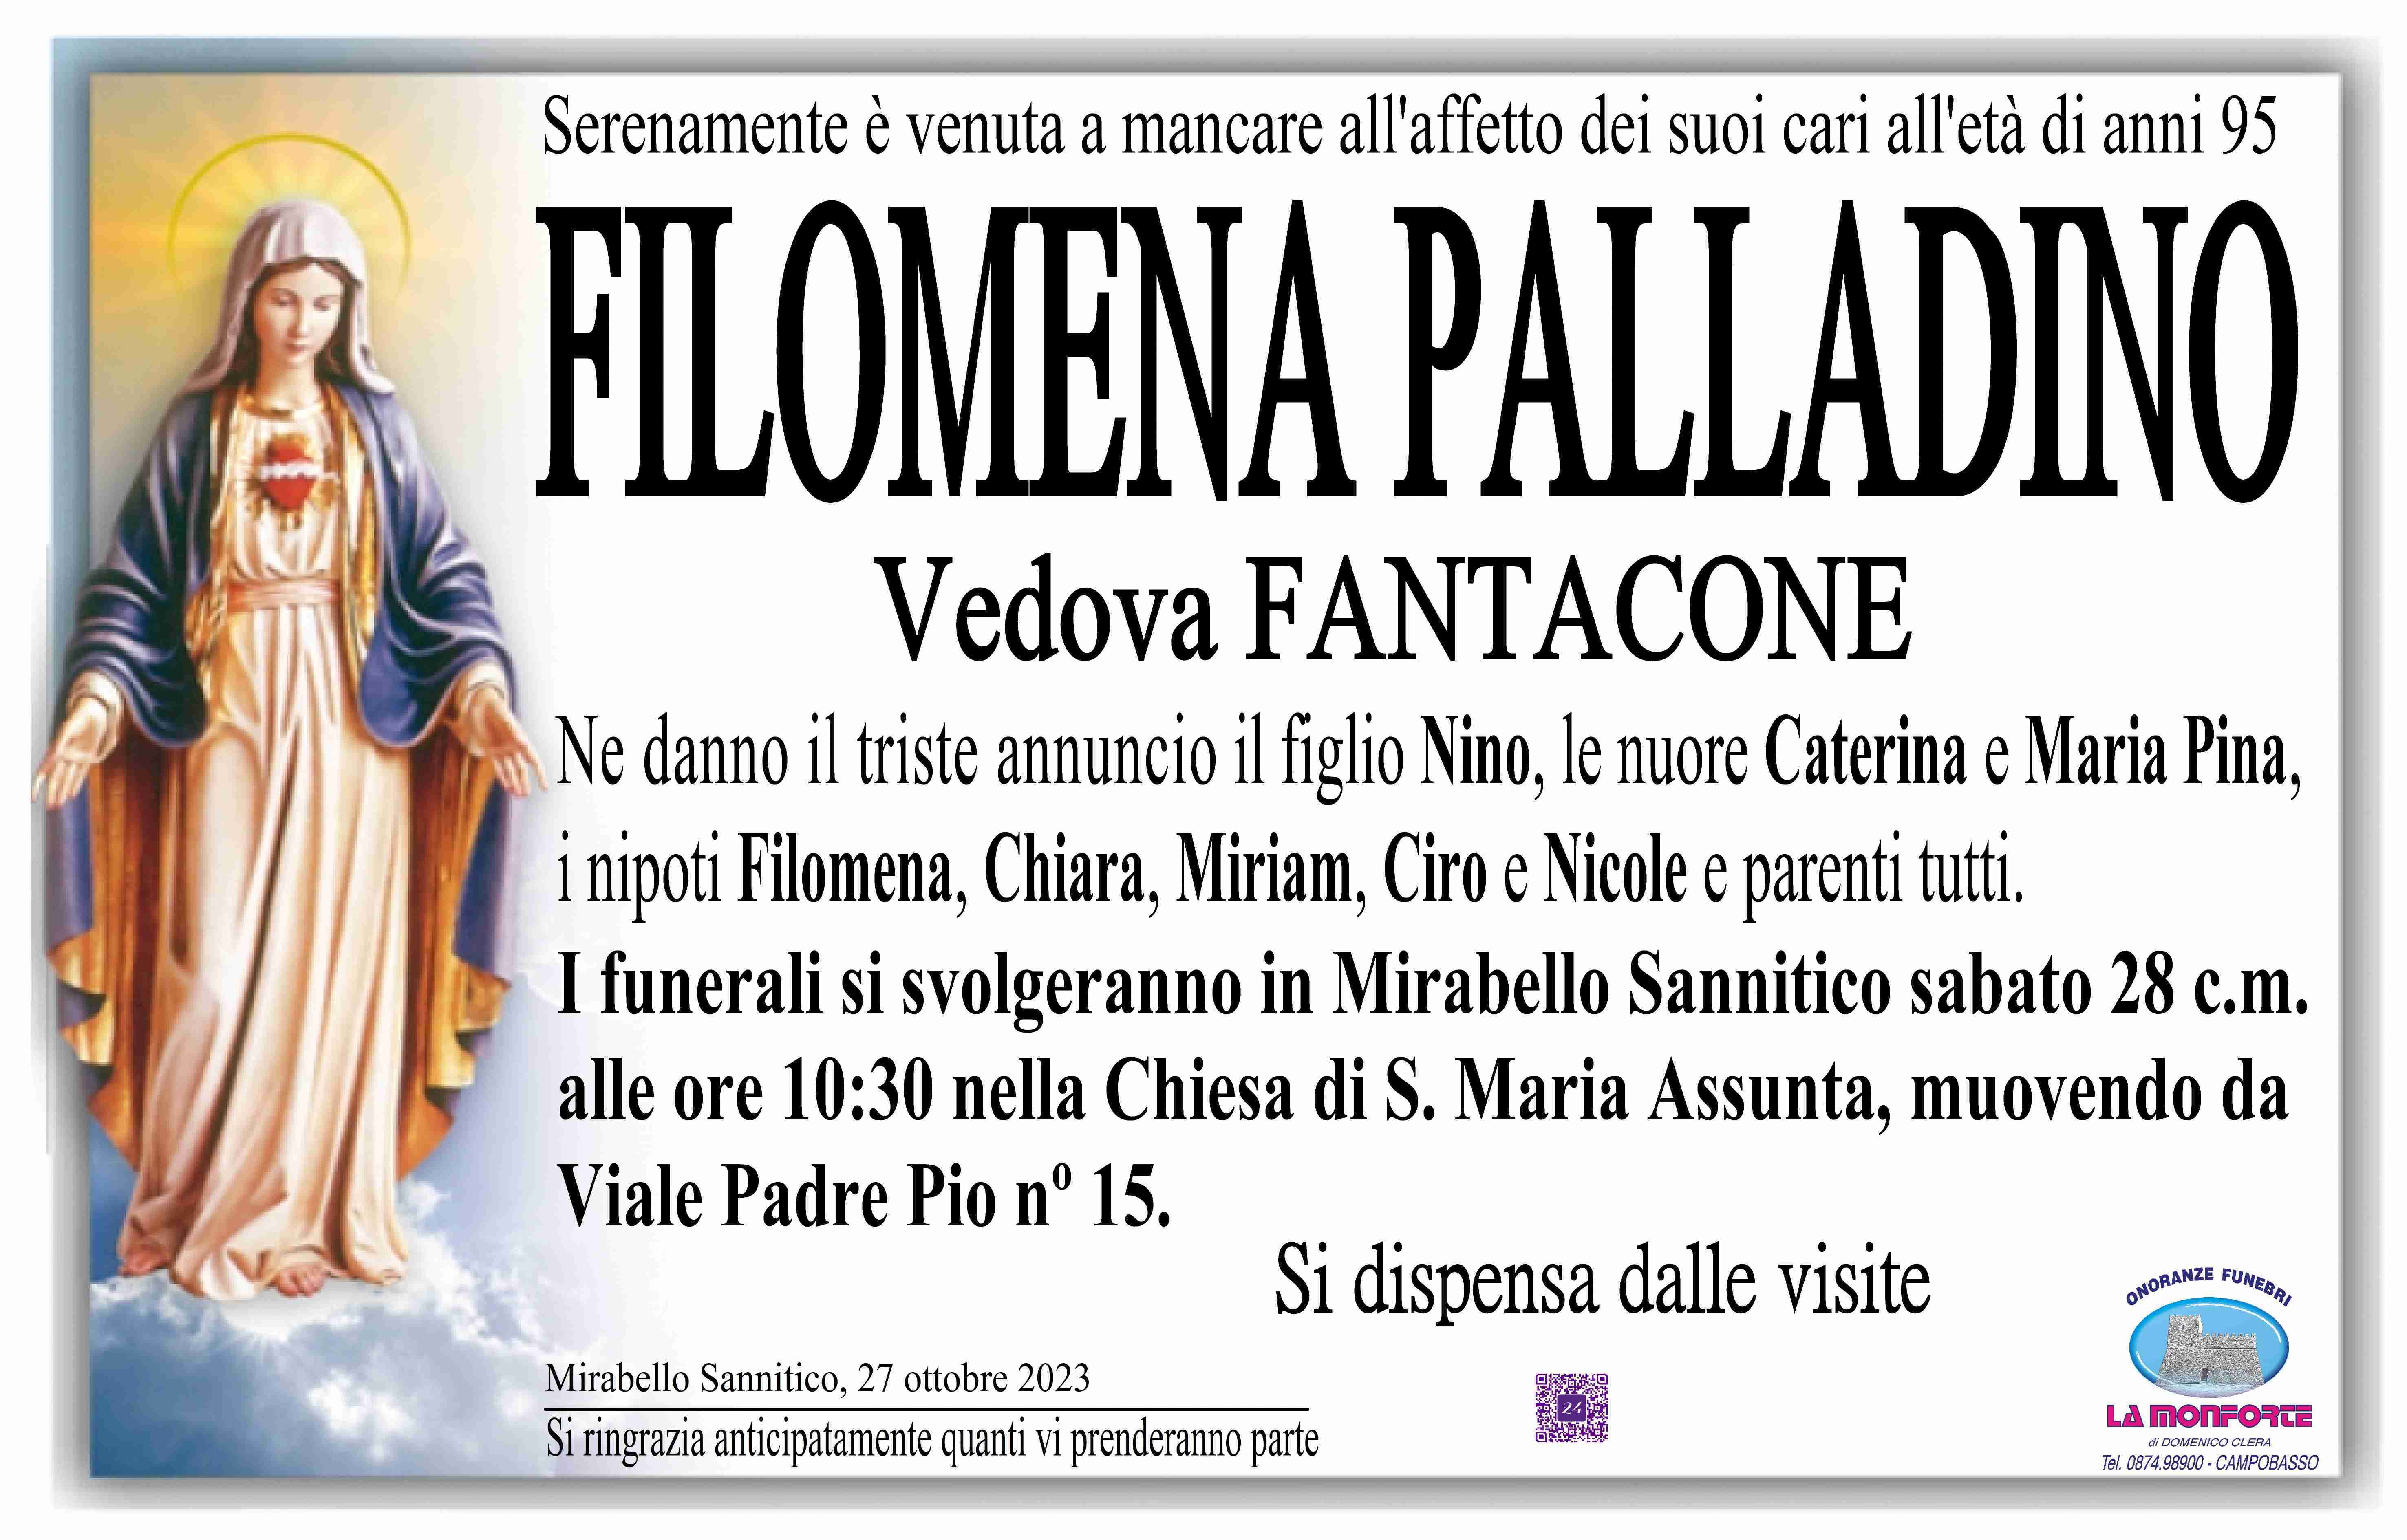 Filomena Palladino